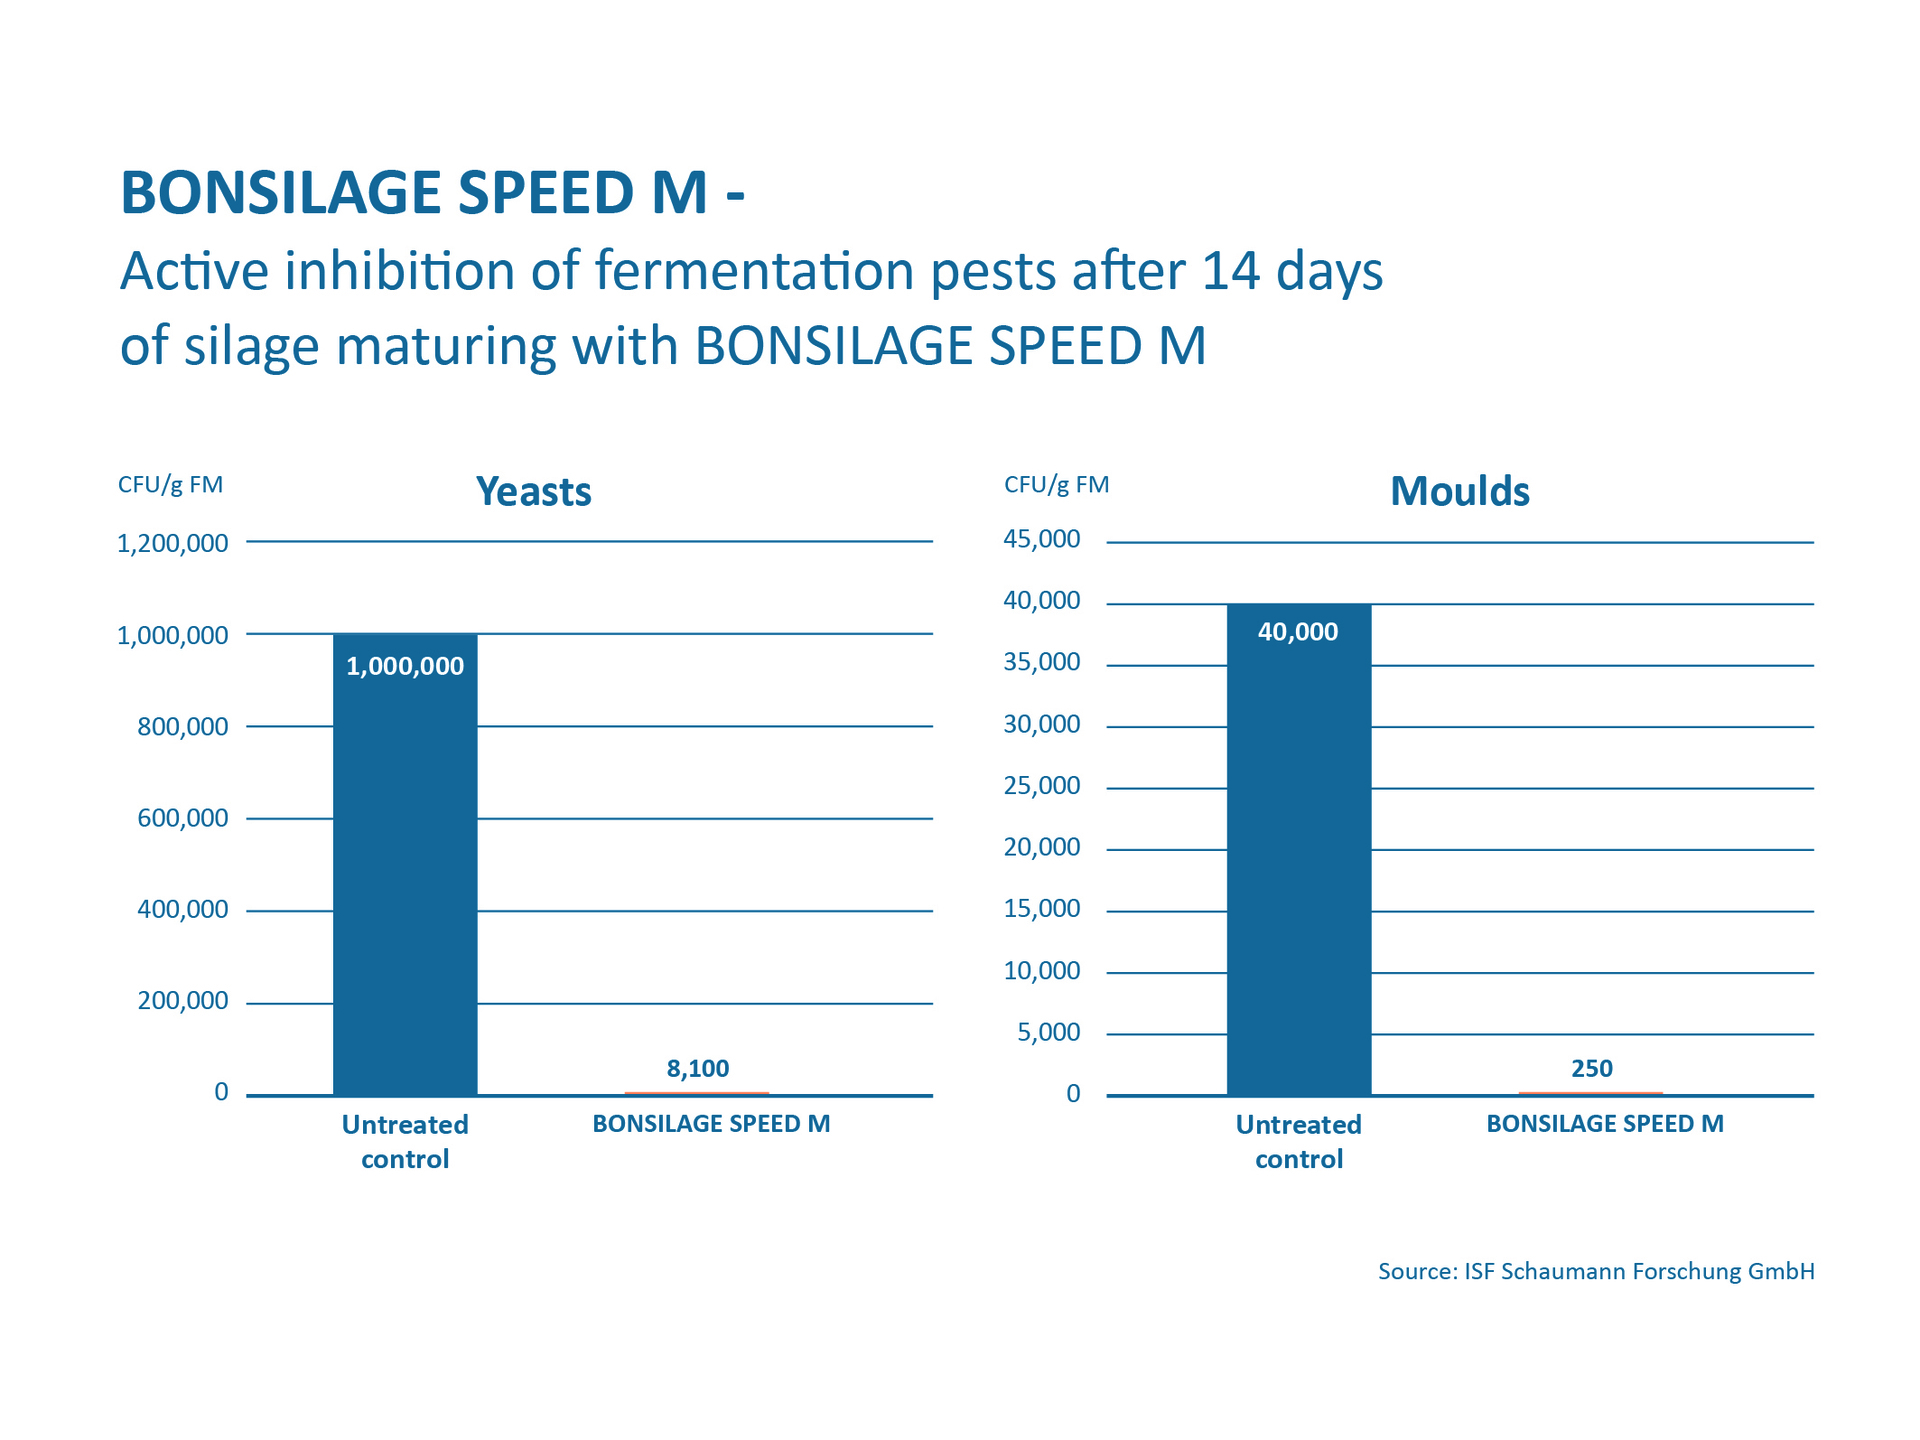 Active inhibition of fermentation pests 